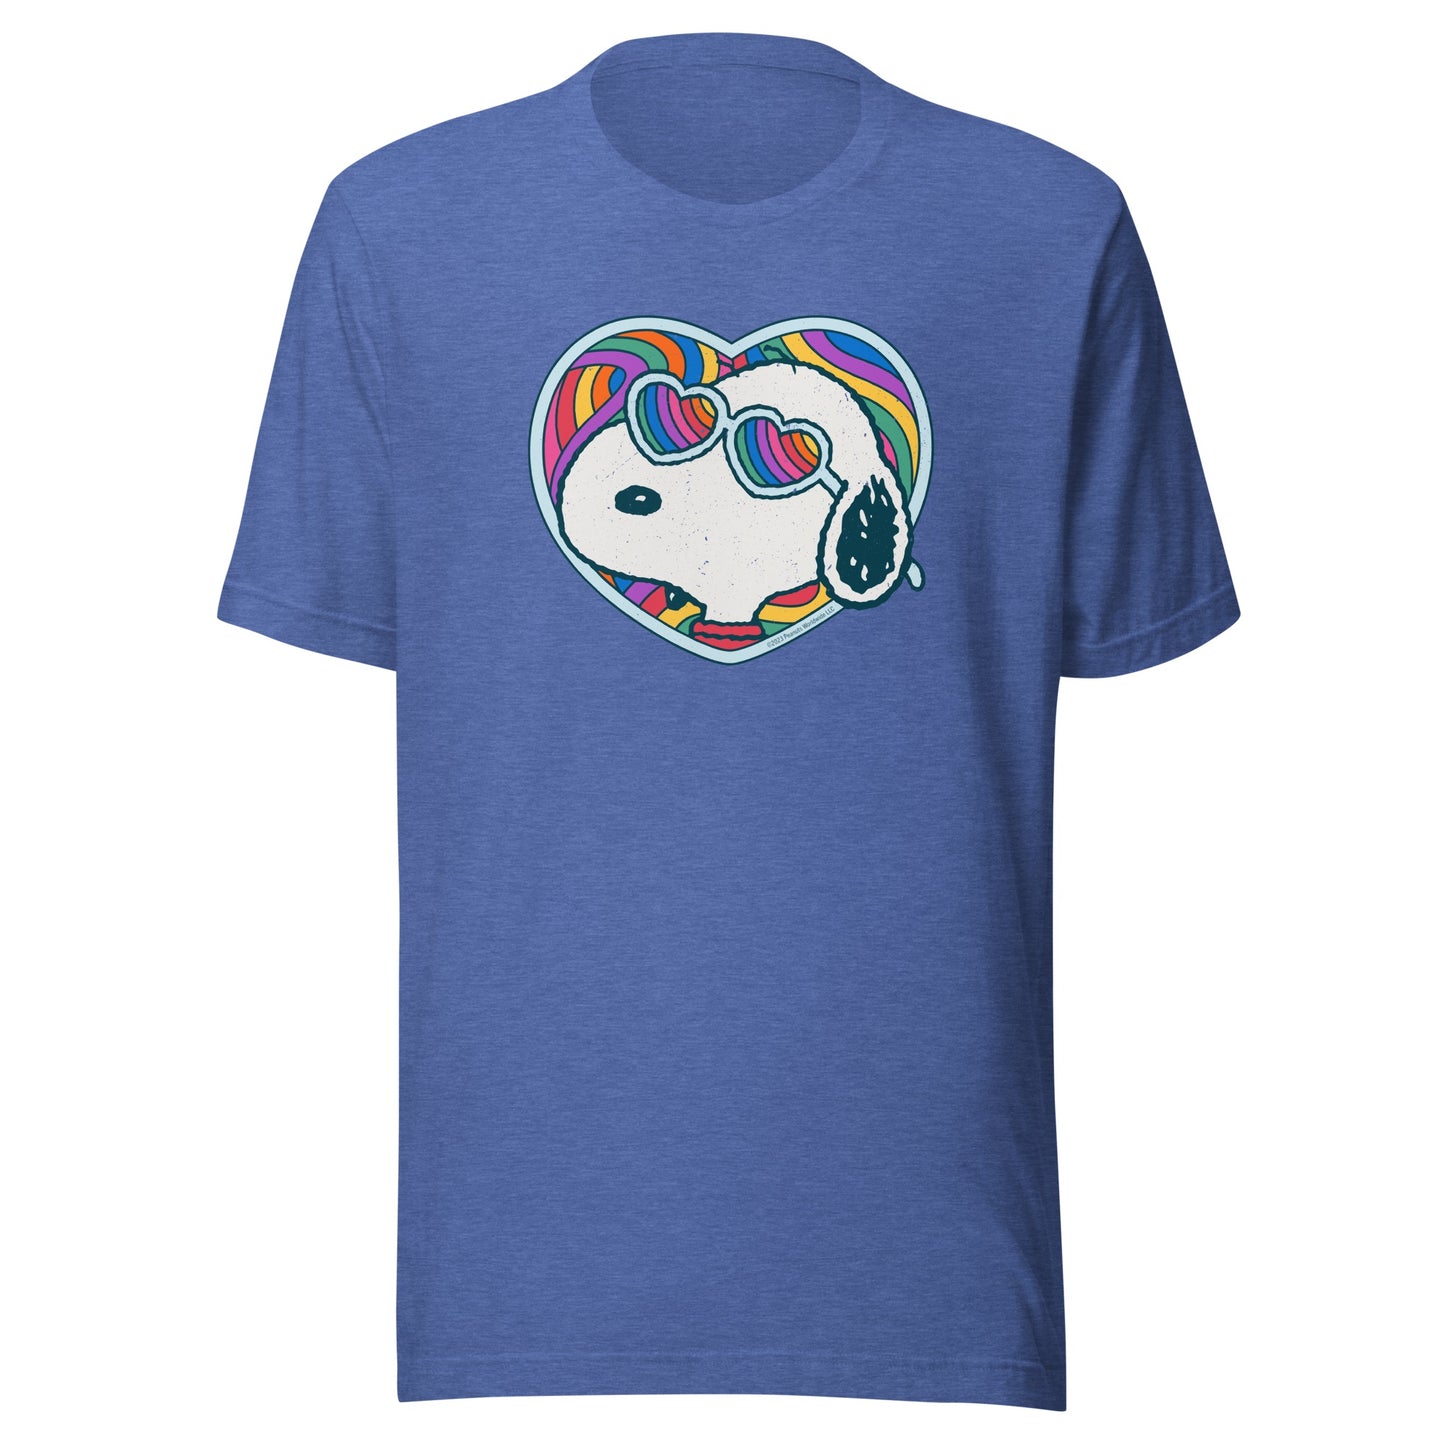 Snoopy Rainbow Heart Adult T-Shirt Adult Short Sleeve T-Shirt